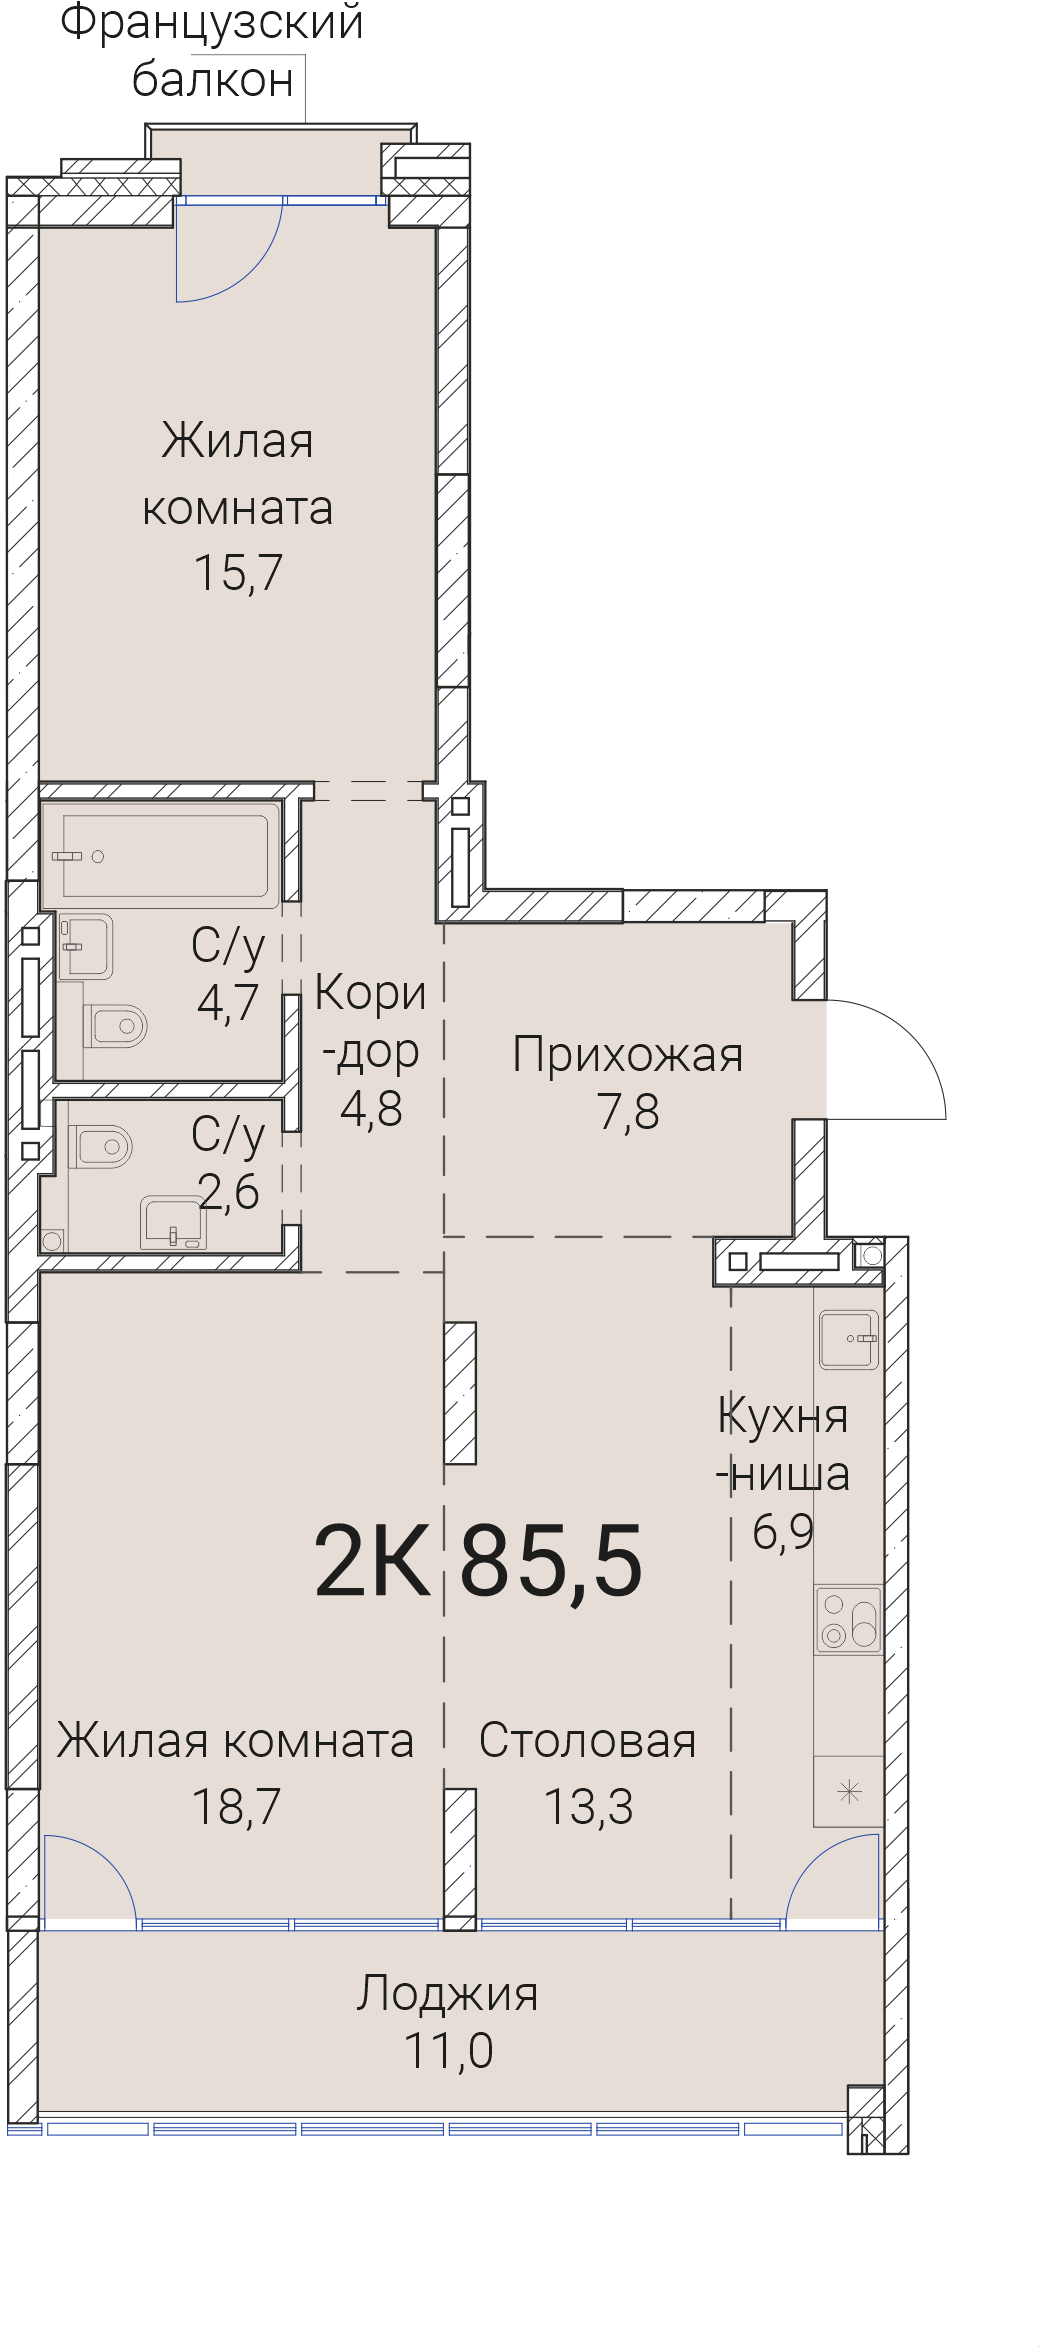 3-комнатная квартира 85.5м2 ЖК Тайм Сквер